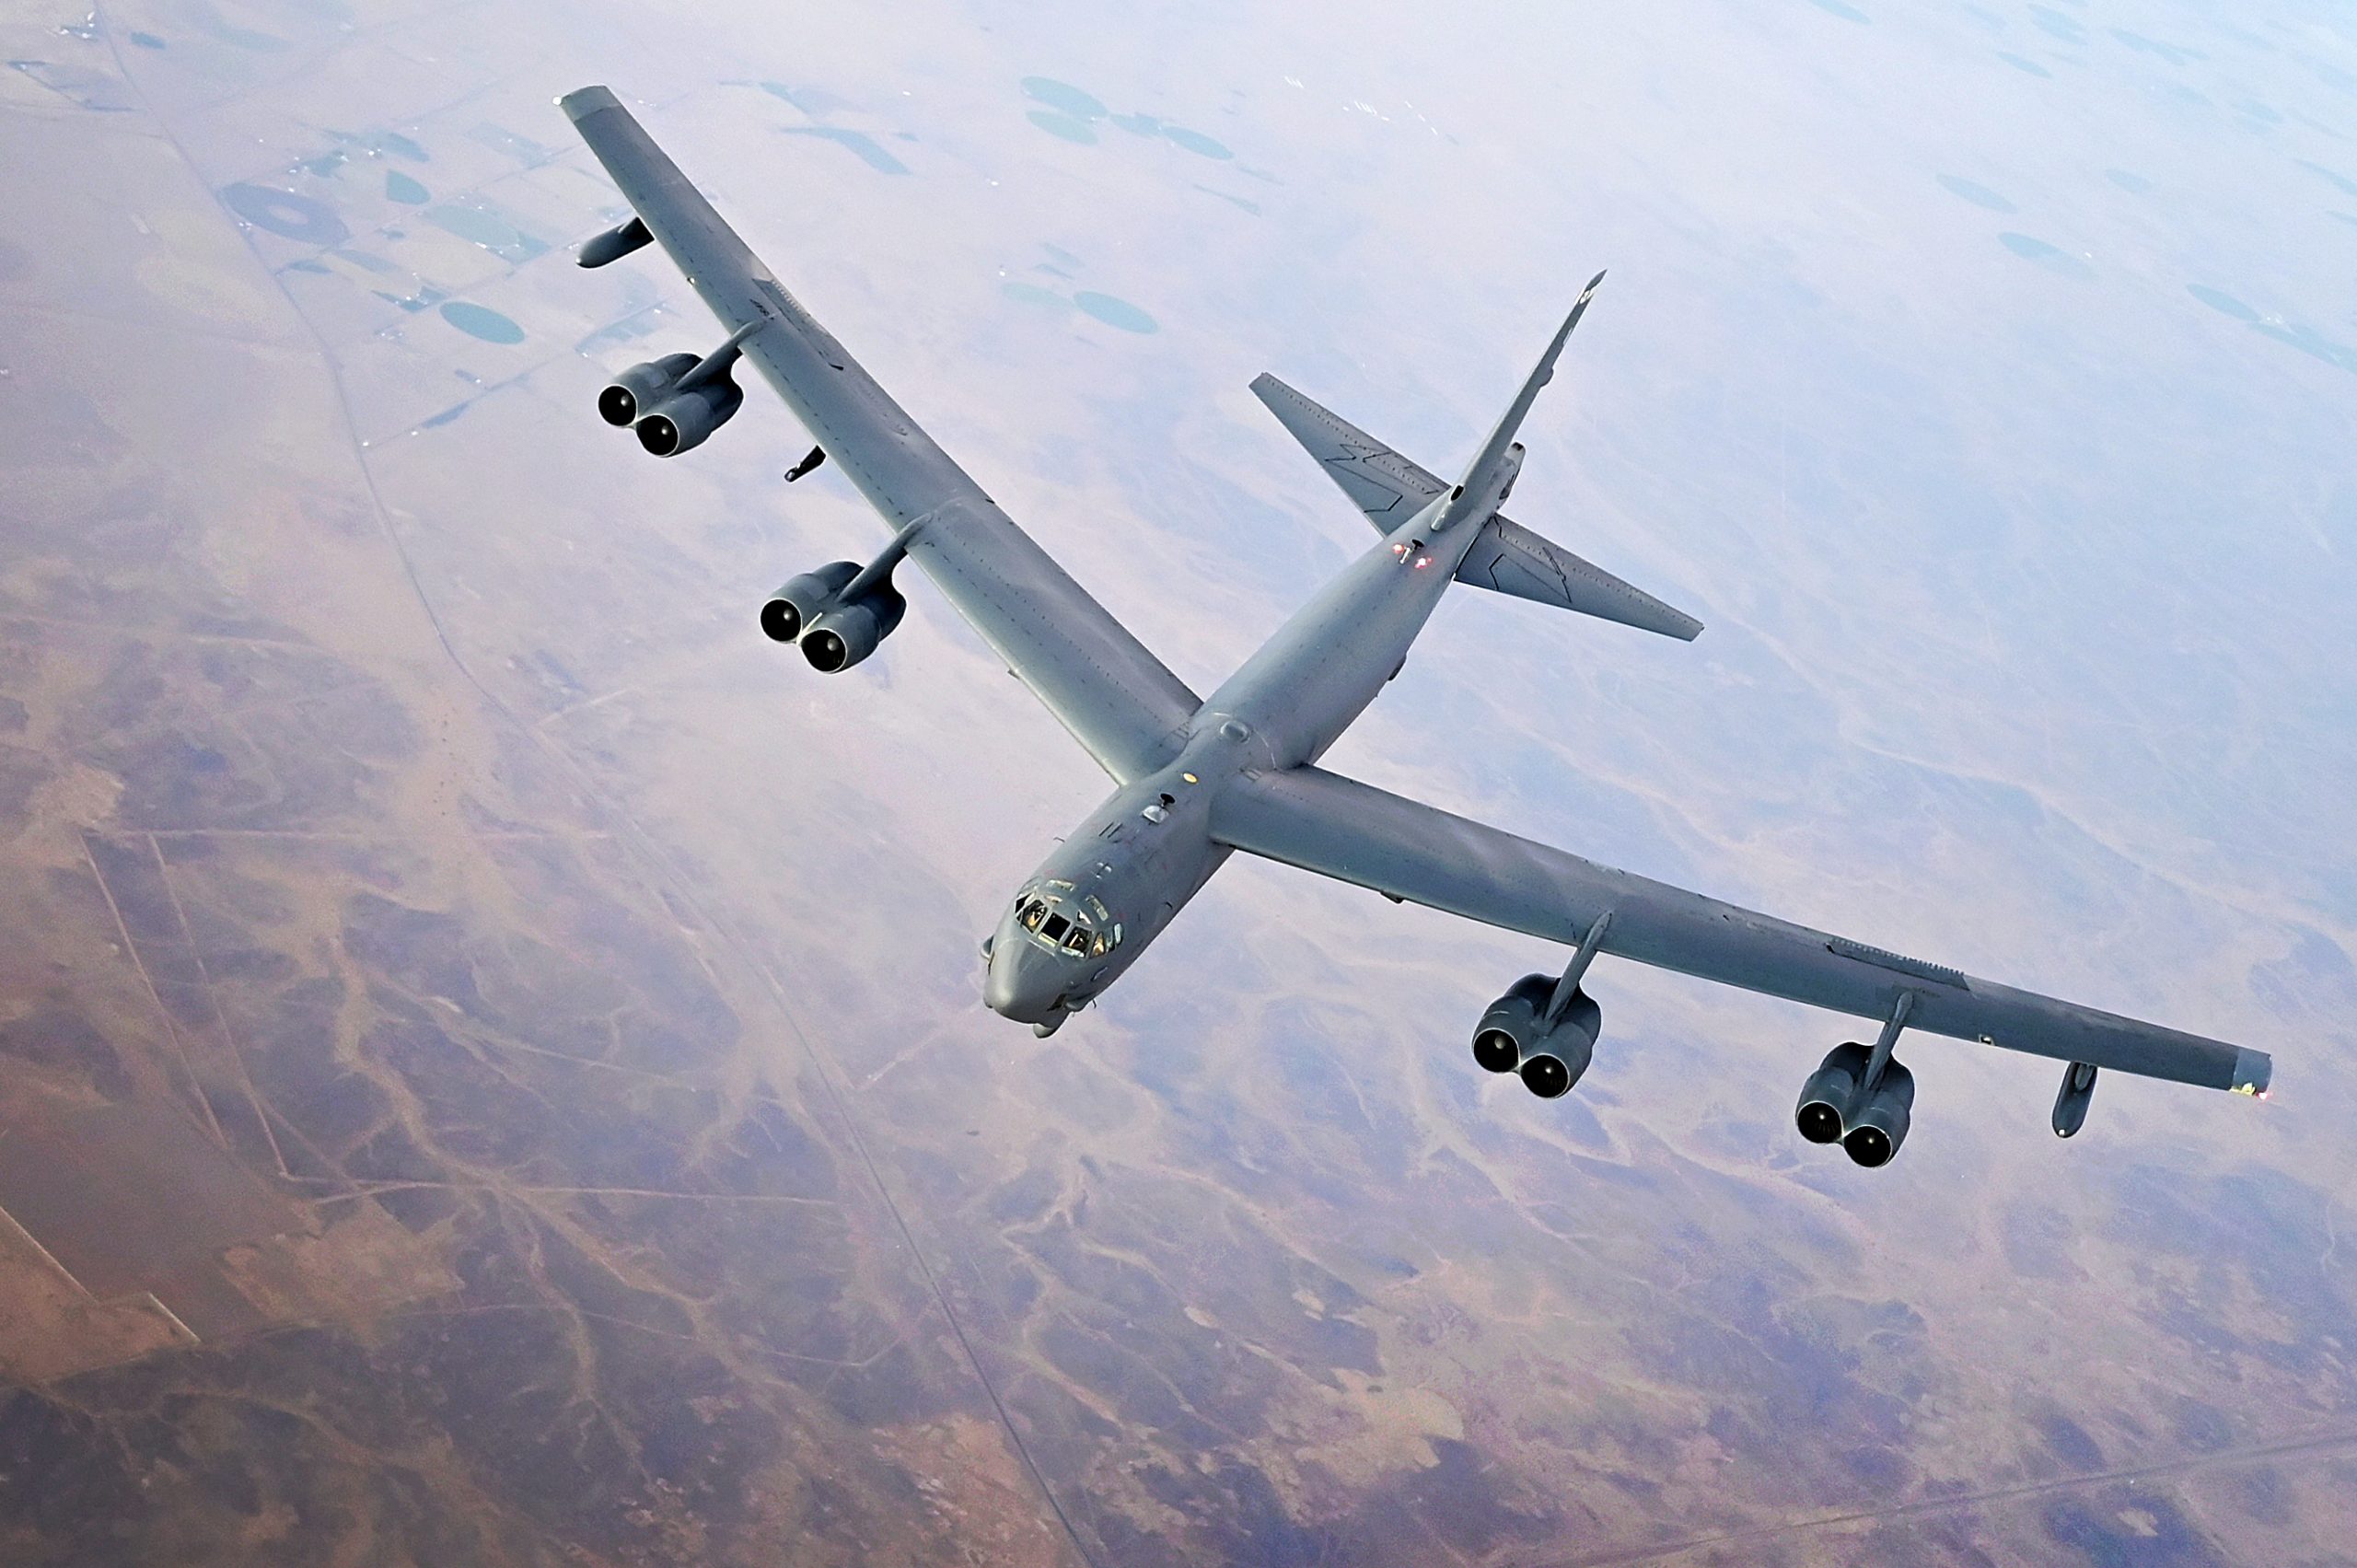 PHOTOS: B-52 Flies over Red Sea and Arabian Peninsula